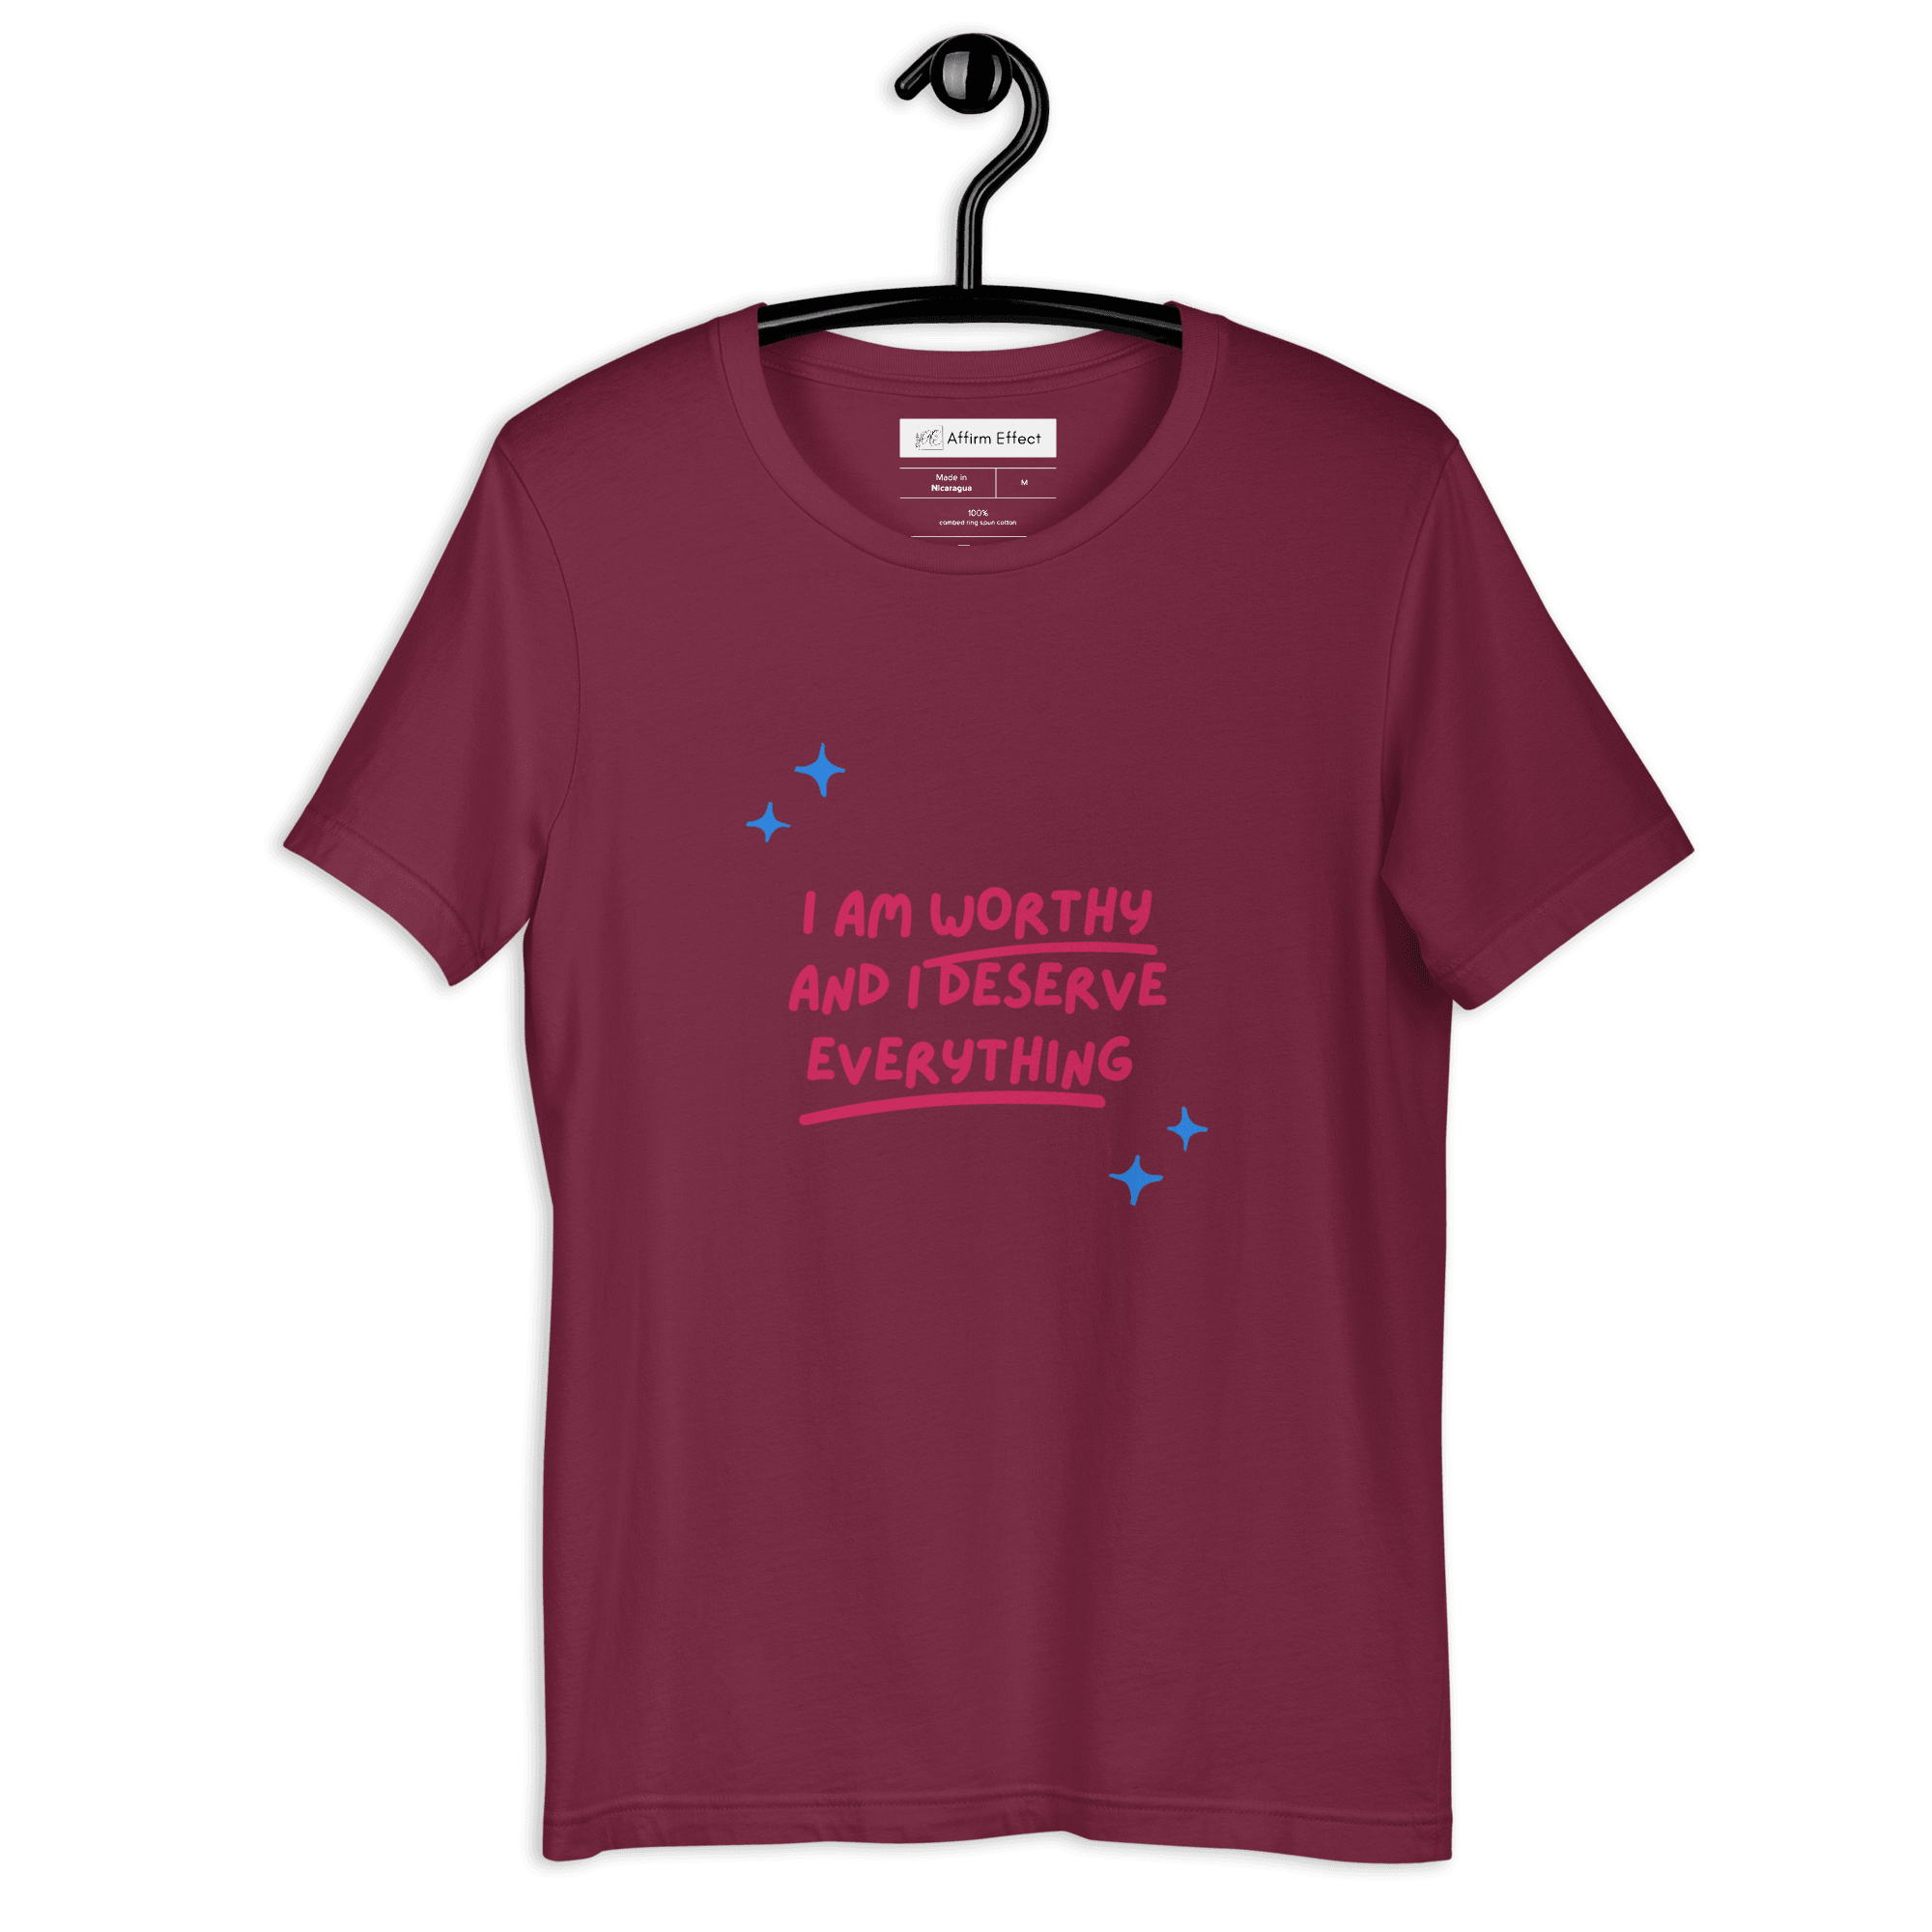 I Am Worthy (New) Short-Sleeve Unisex T-Shirt | Positive Affirmation Tee - Affirm Effect